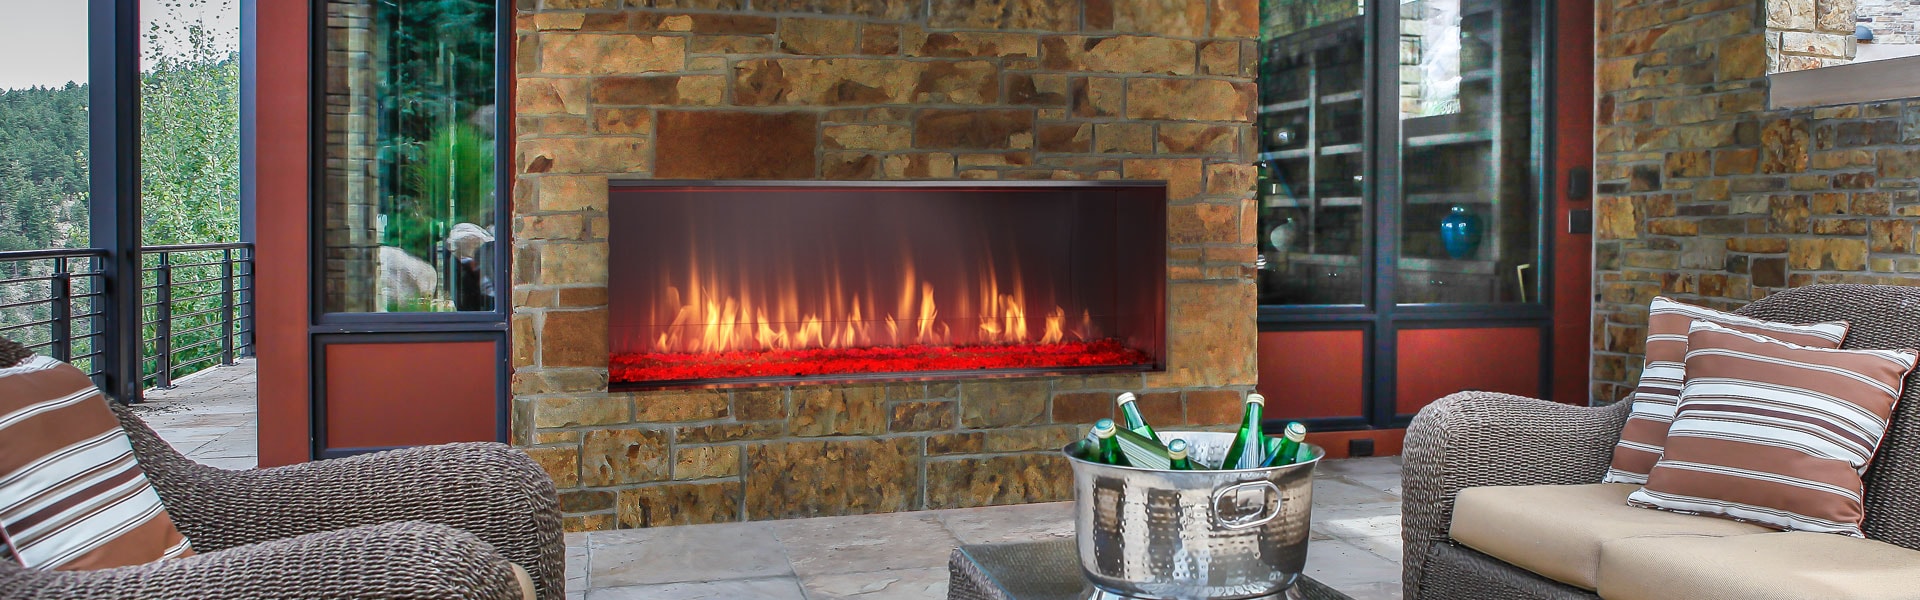 Fireplace Heatilator Vent Covers Best Of Lanai Gas Fireplace